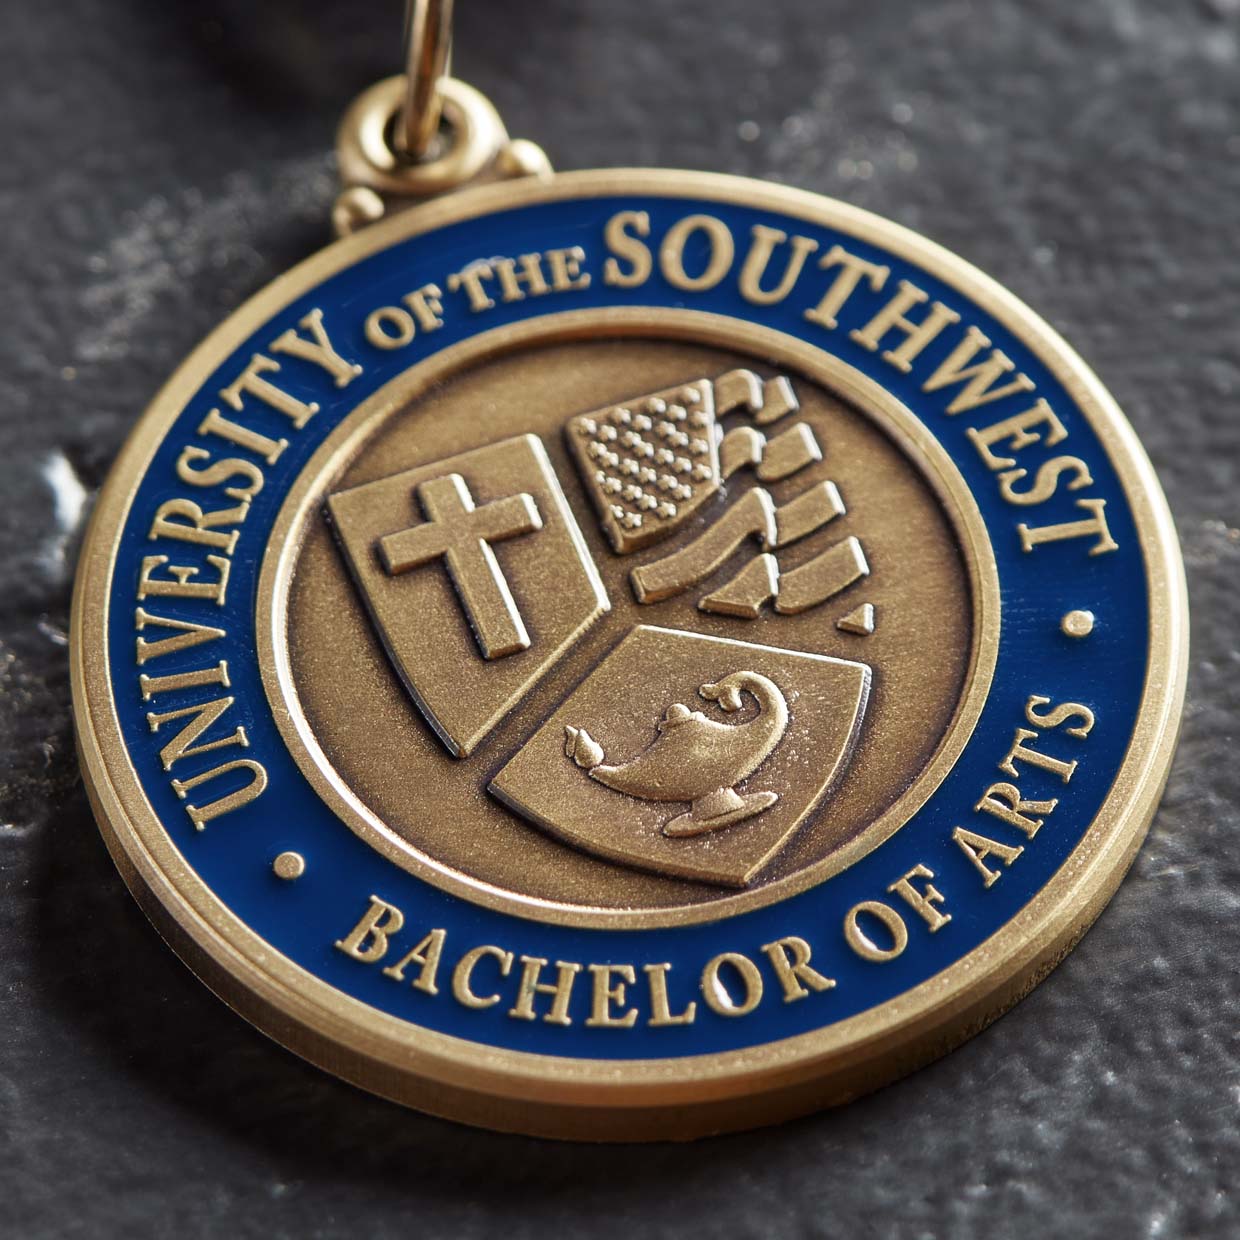 Bachelor of Arts Medal Detail